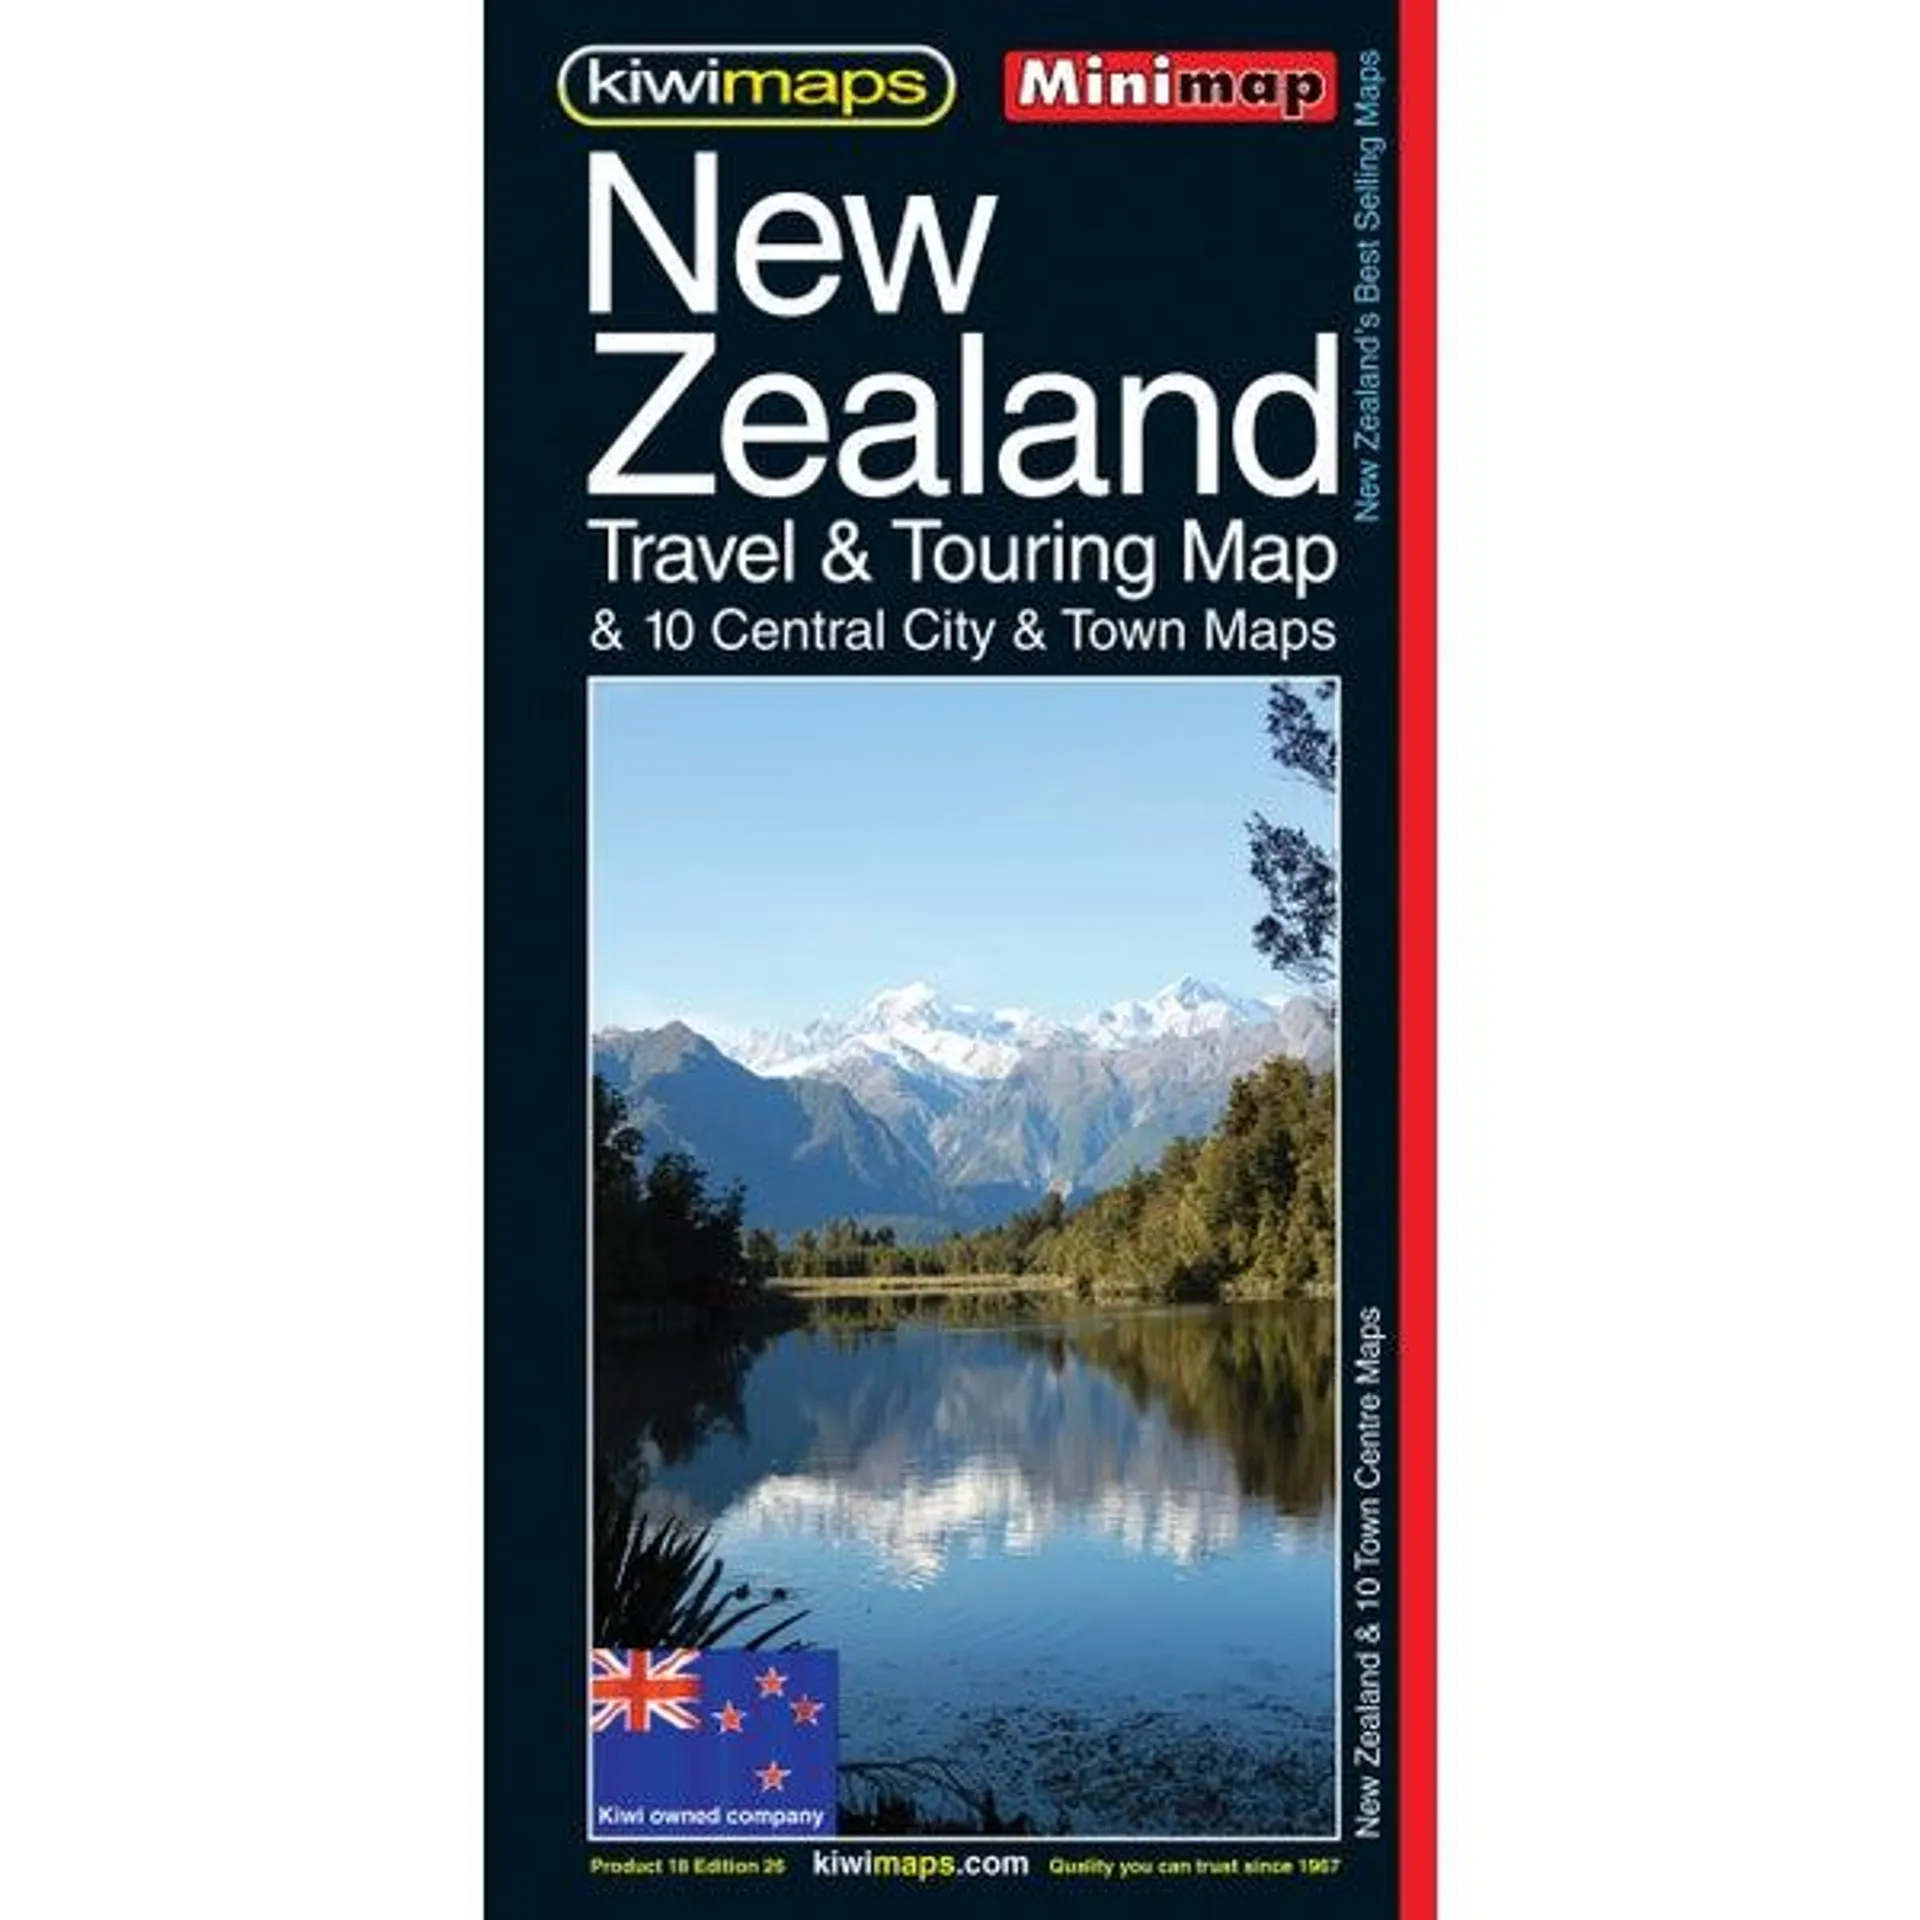 Minimap New Zealand Travel & Touring Map Single Item